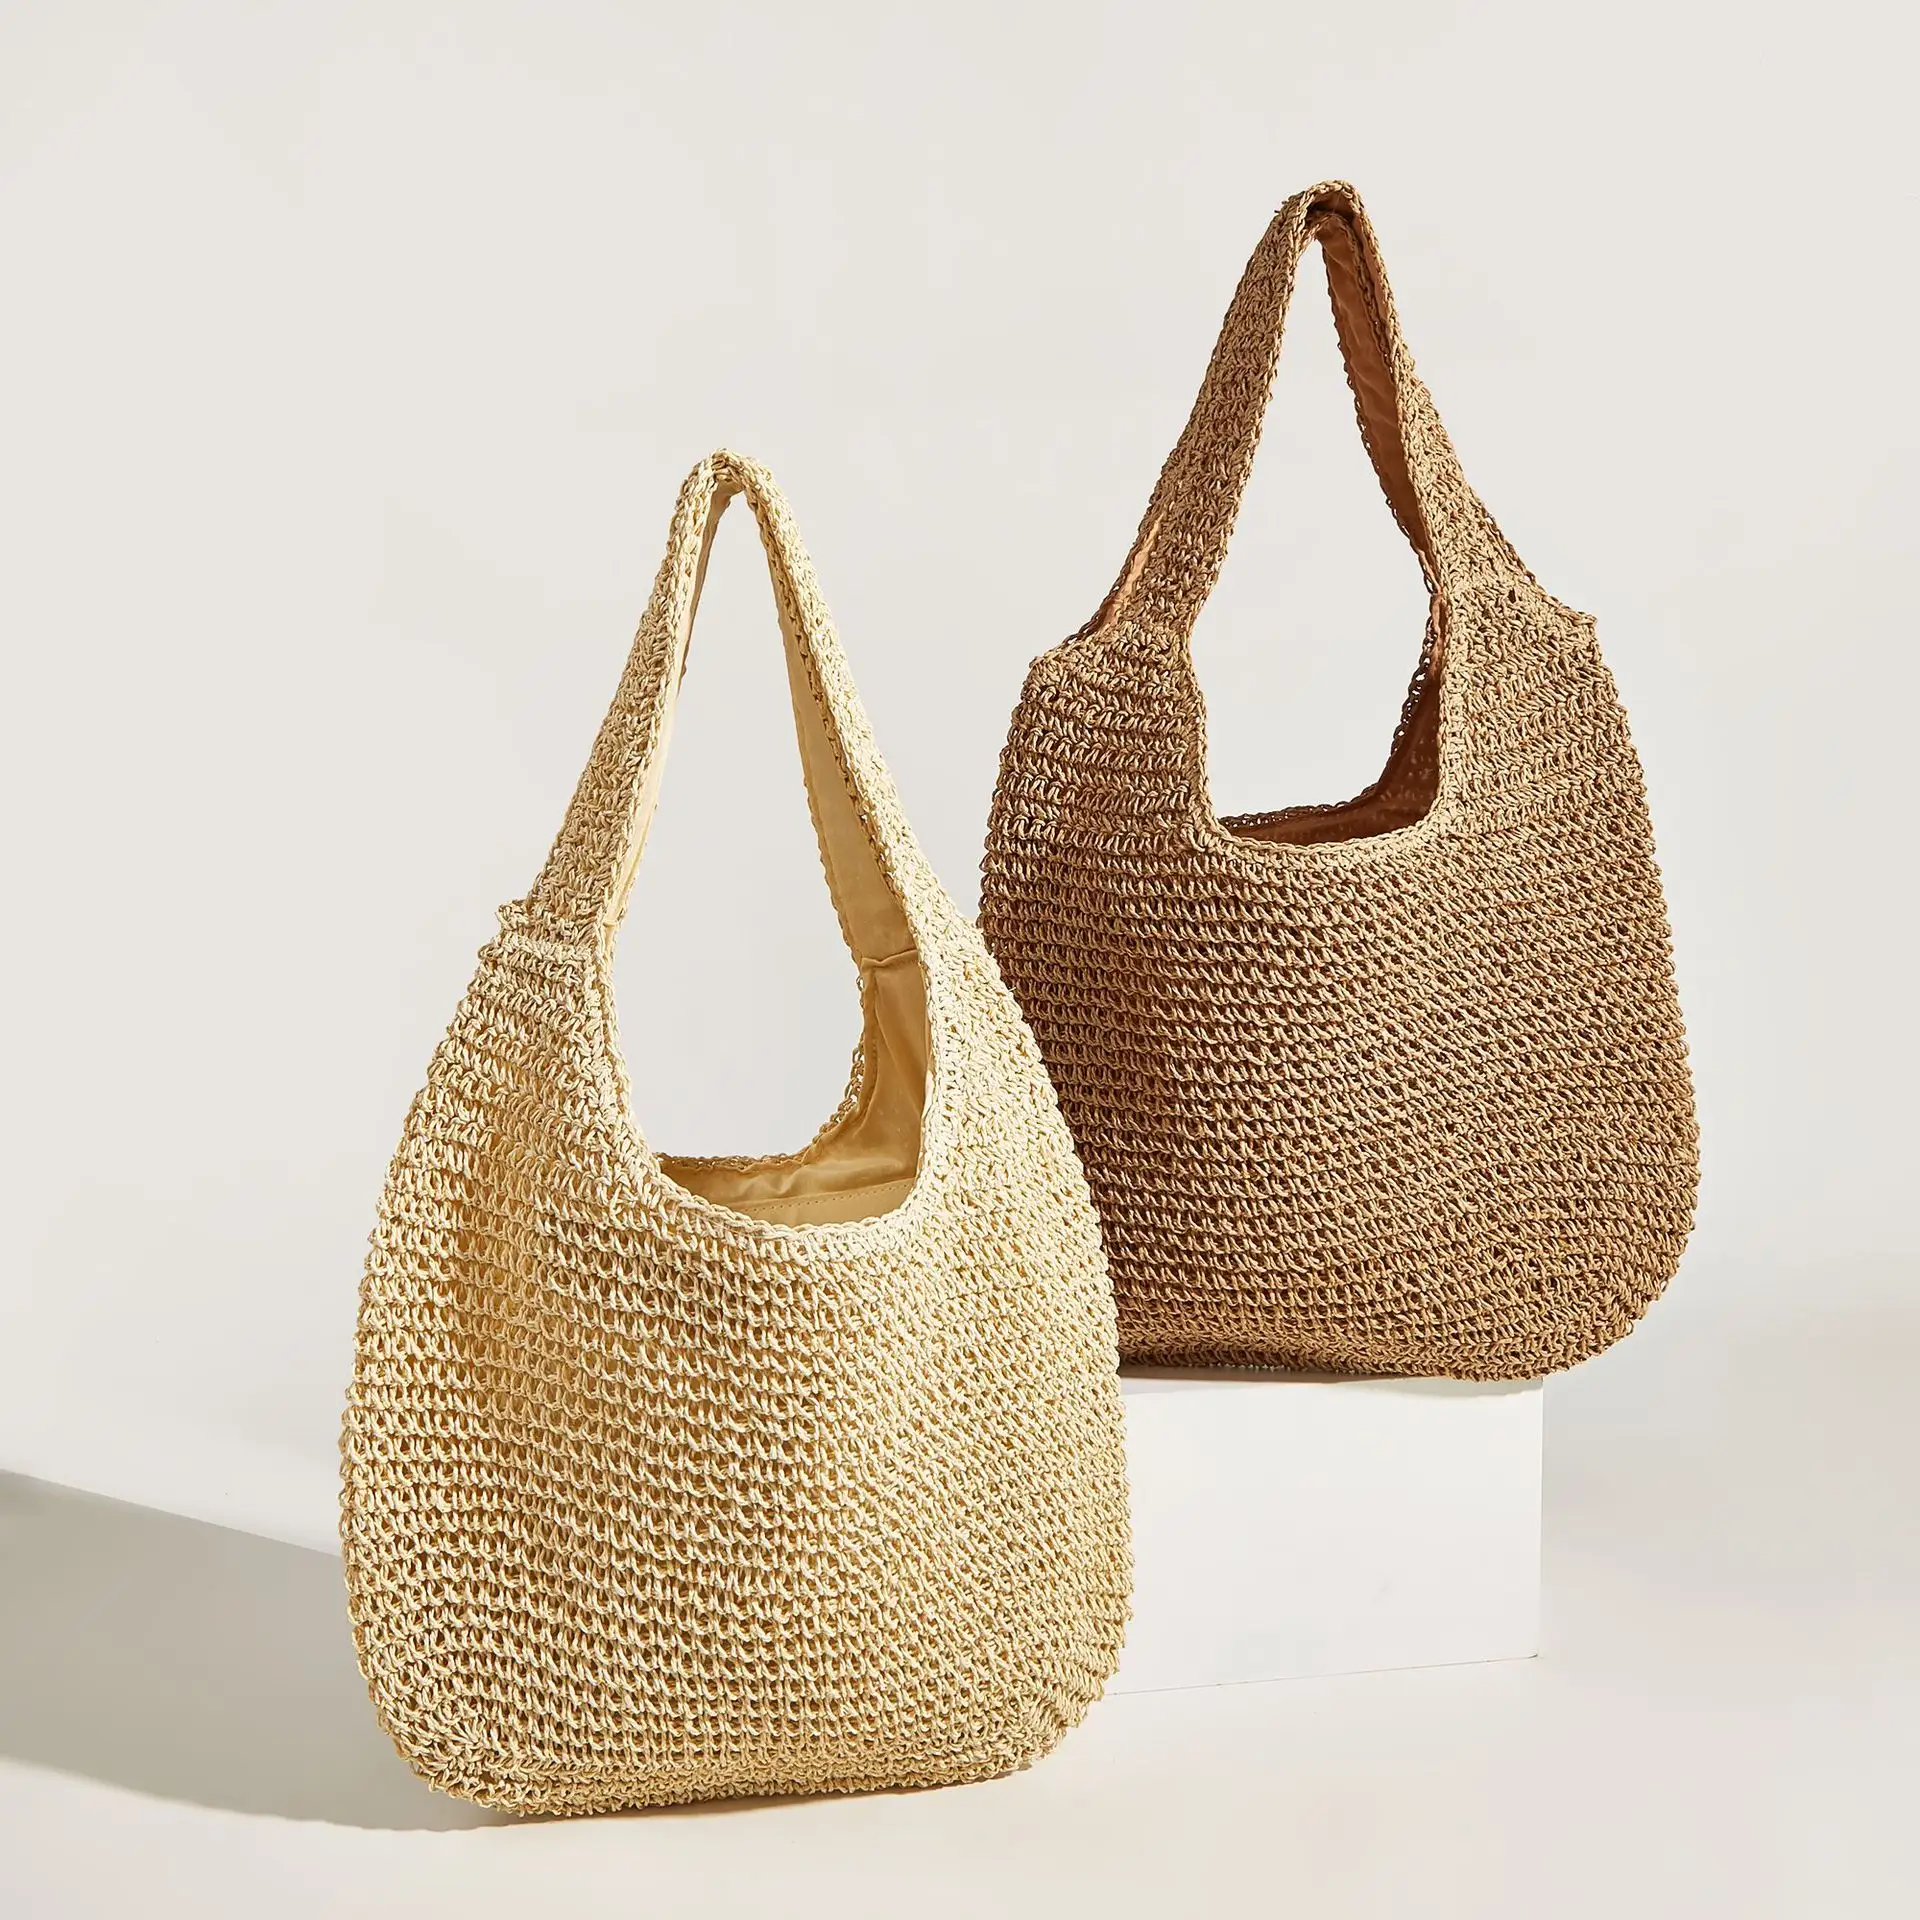 Best Selling Summer Large Round Tote Shoulder Bag Handmade Raffia Straw Beach Bag For Women